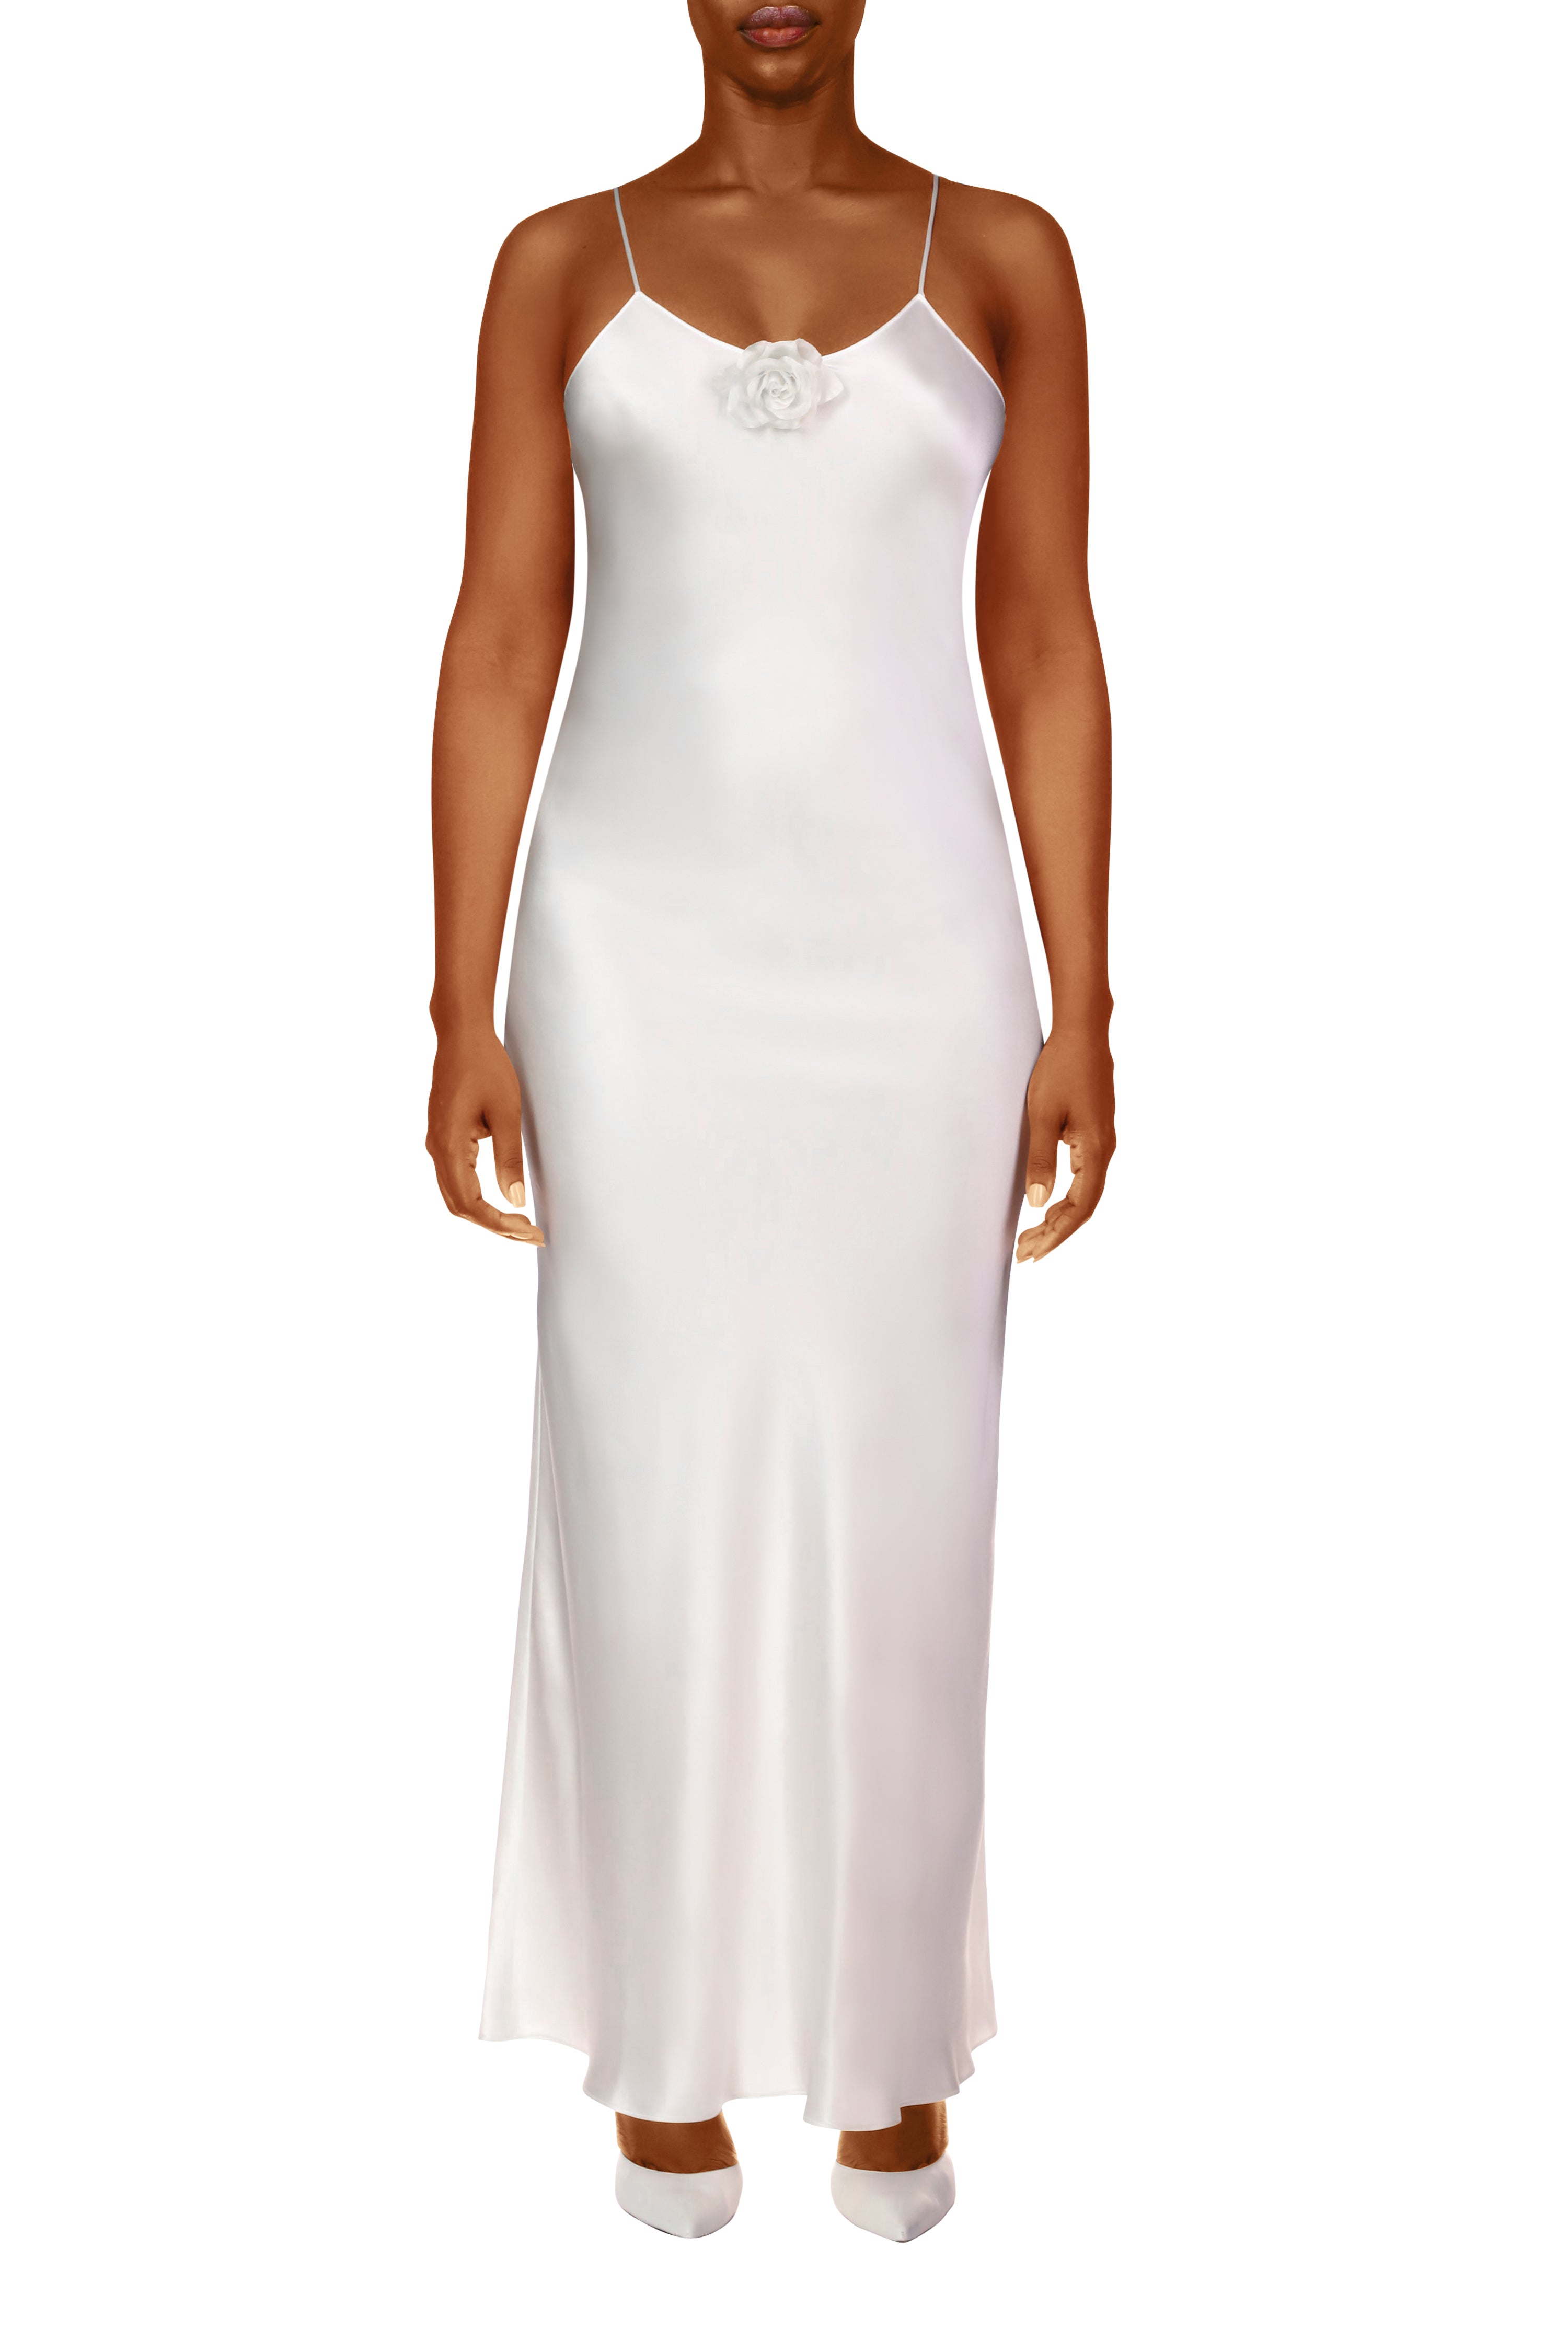 White Satin Dresses, White Silky & Slip Dresses